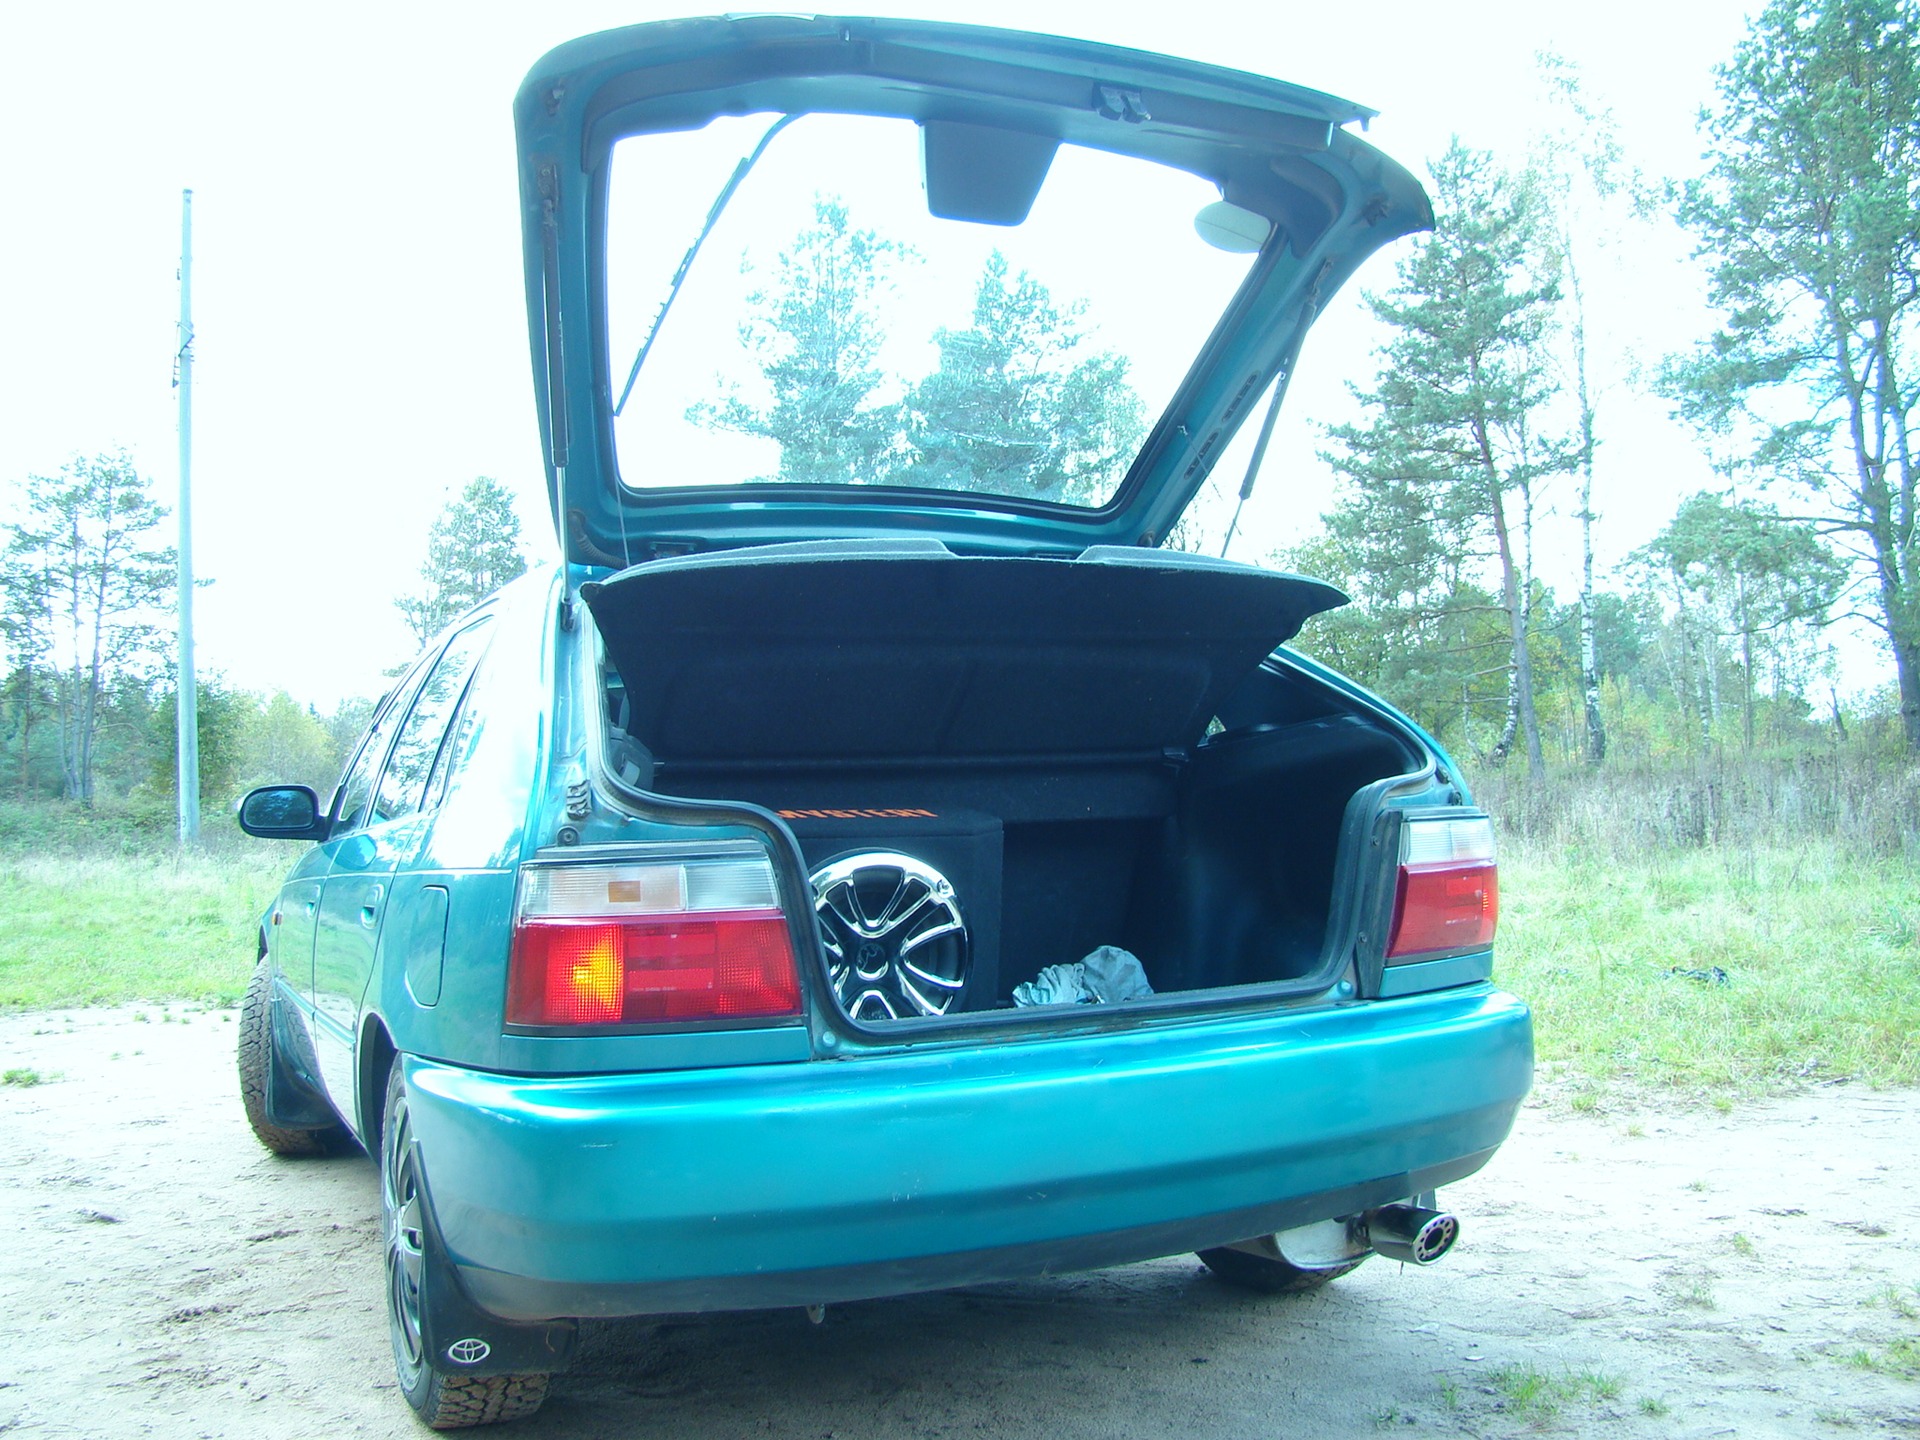     Toyota Corolla 13 1997